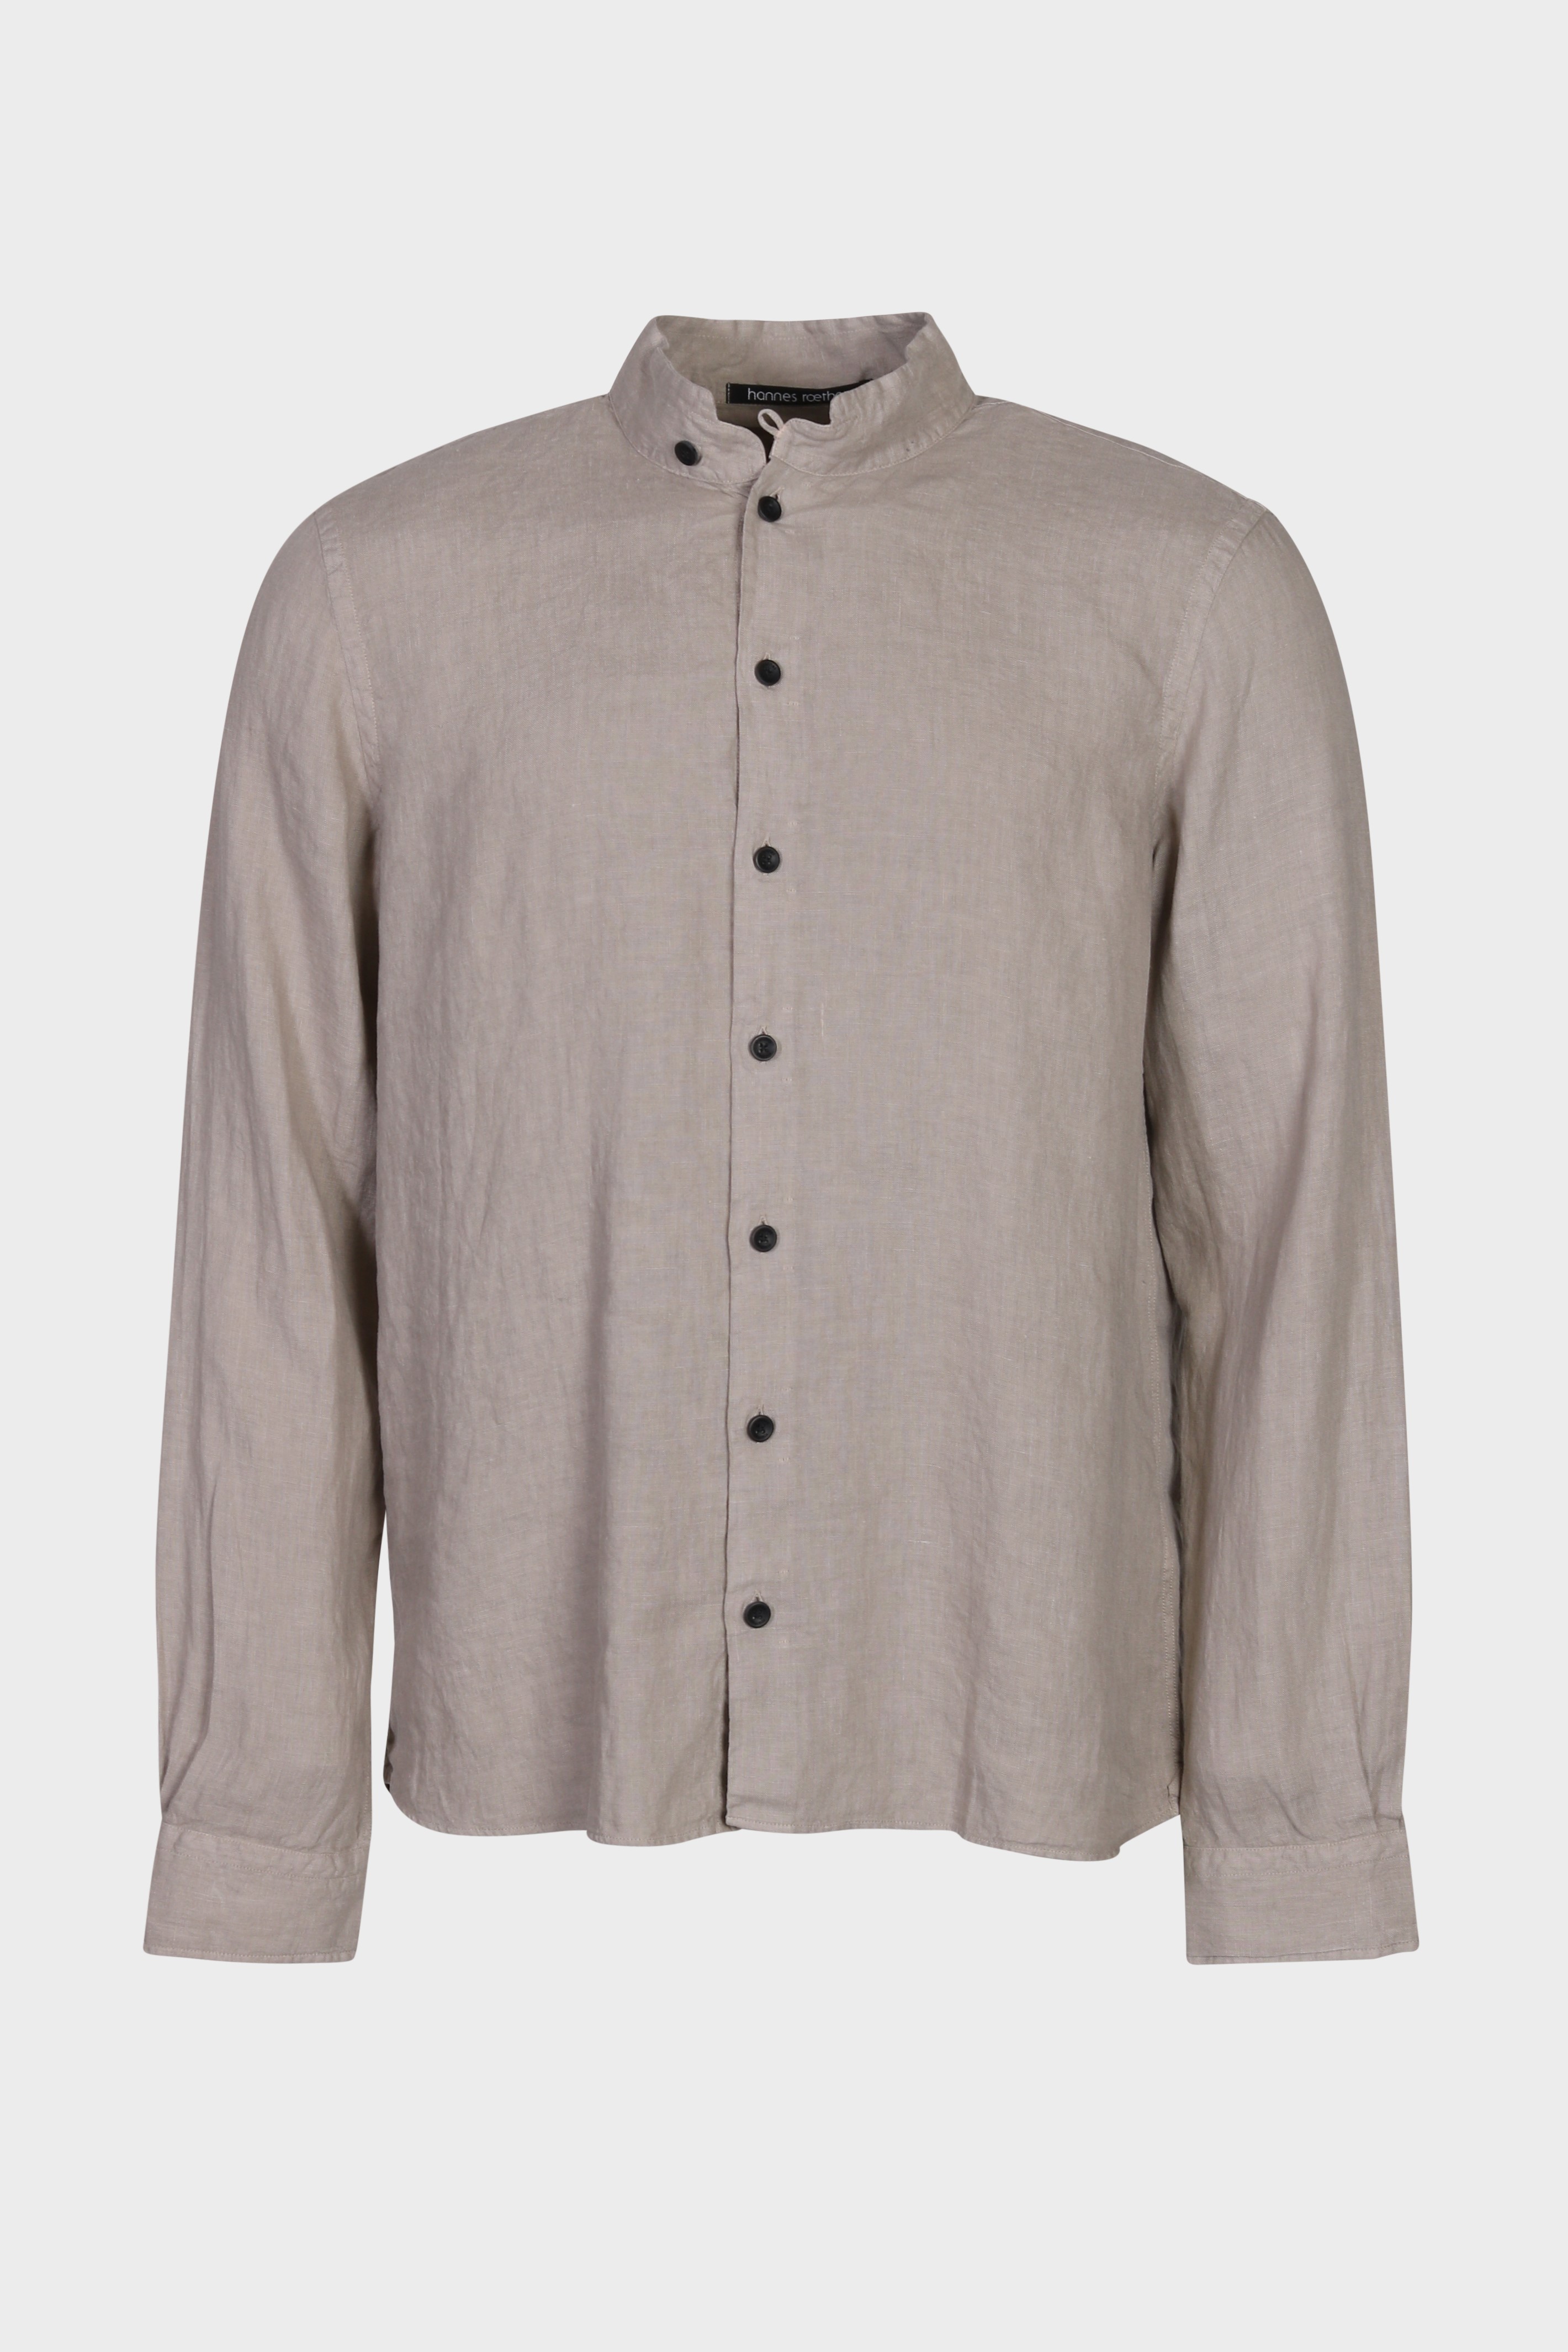 HANNES ROETHER Linen Shirt in Light Grey 2XL